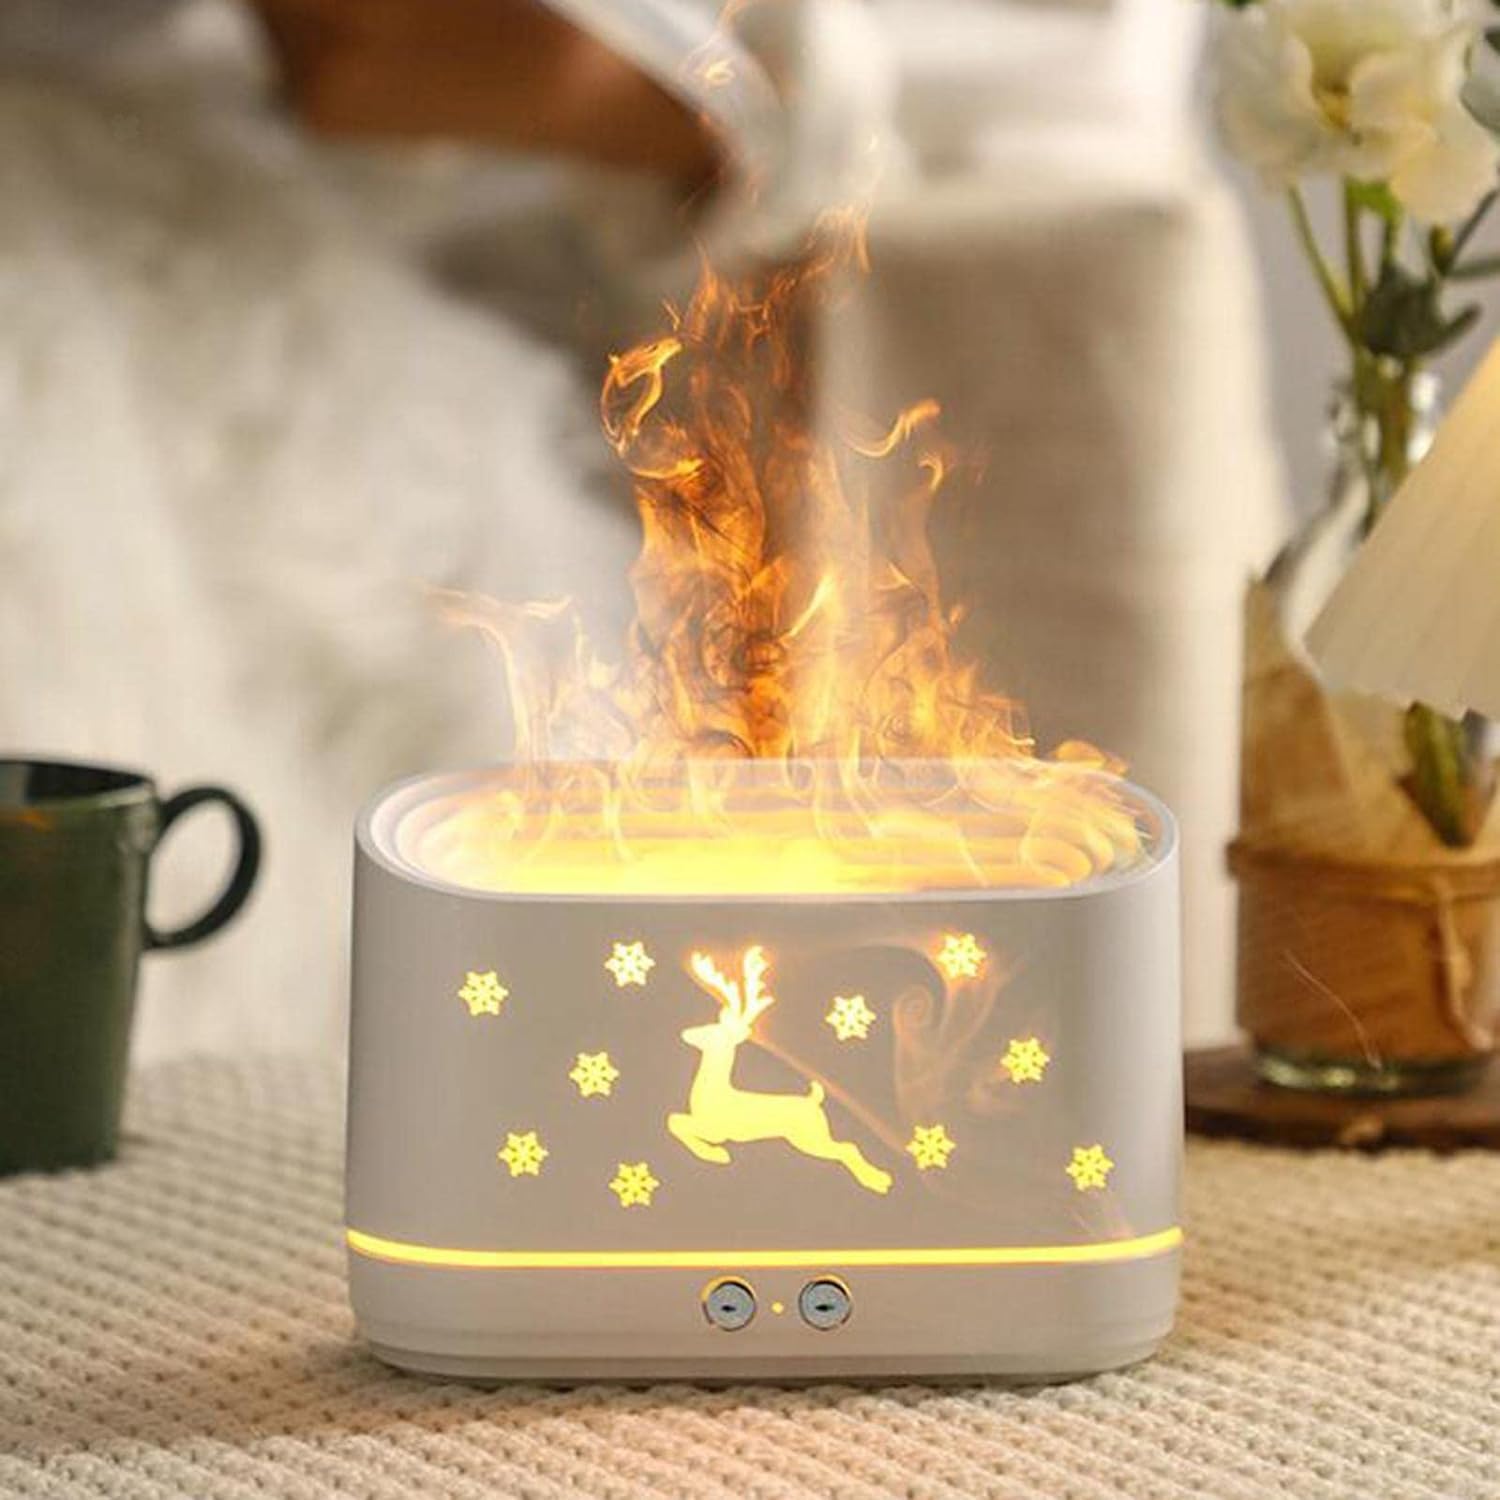 Premium Flame Diffuser Humidifier - Realistic Flame, Quiet Operation, Auto Shut-Off | Aromatherapy for Home & Yoga. - HIVAGI®